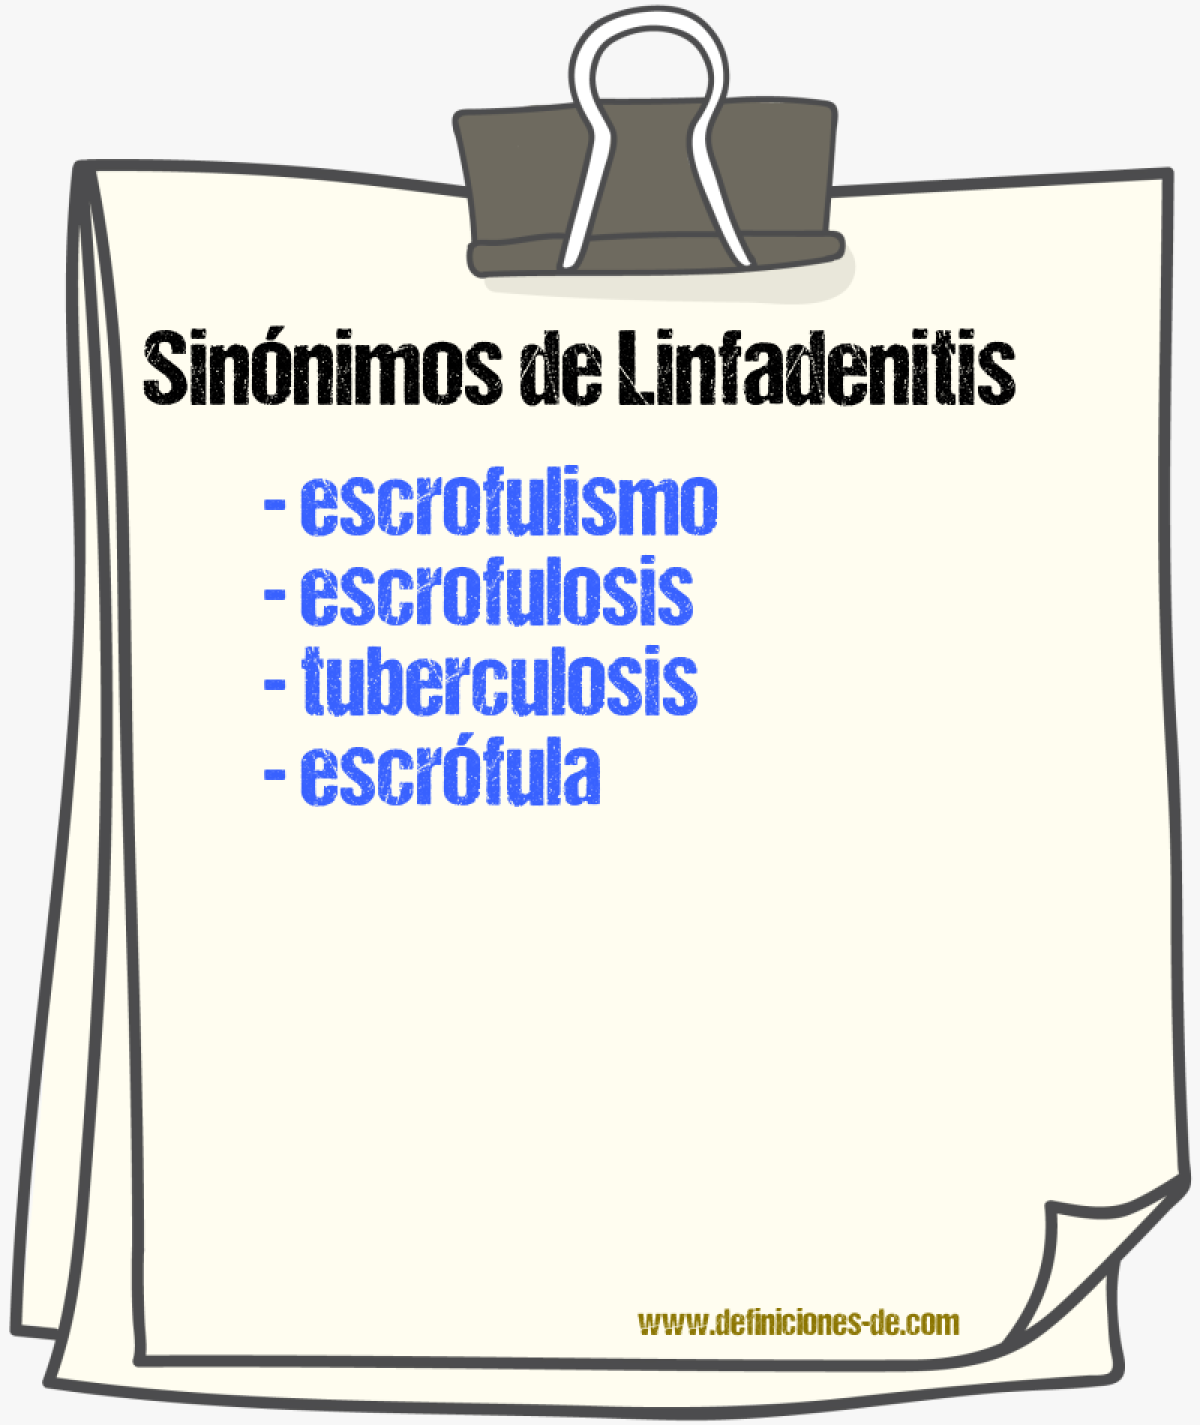 Sinnimos de linfadenitis